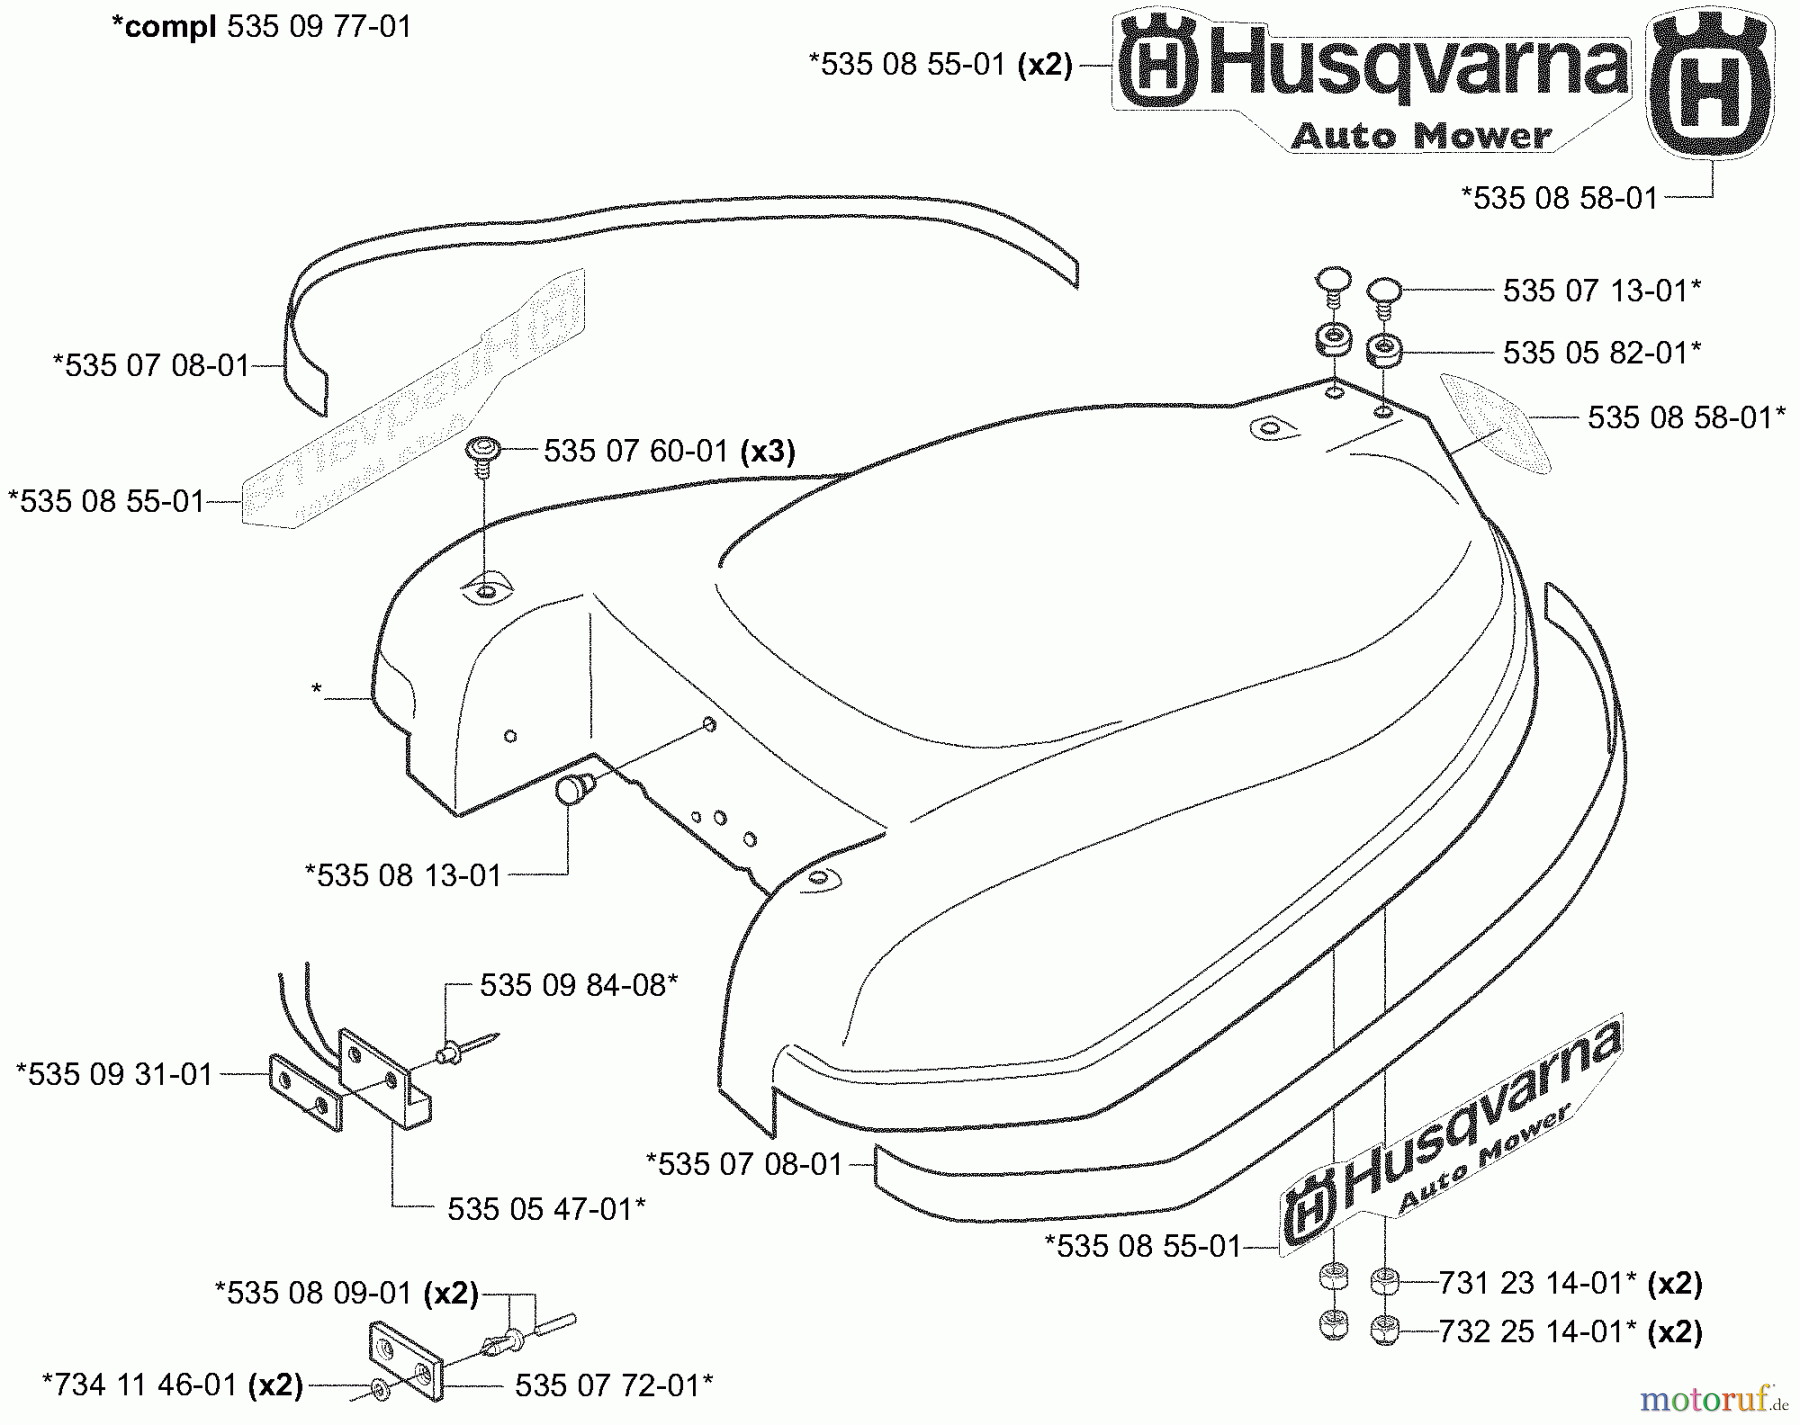  Husqvarna Automower, Mähroboter 953528302 - Husqvarna Auto Mower (2003-04 & After) Body Assembly